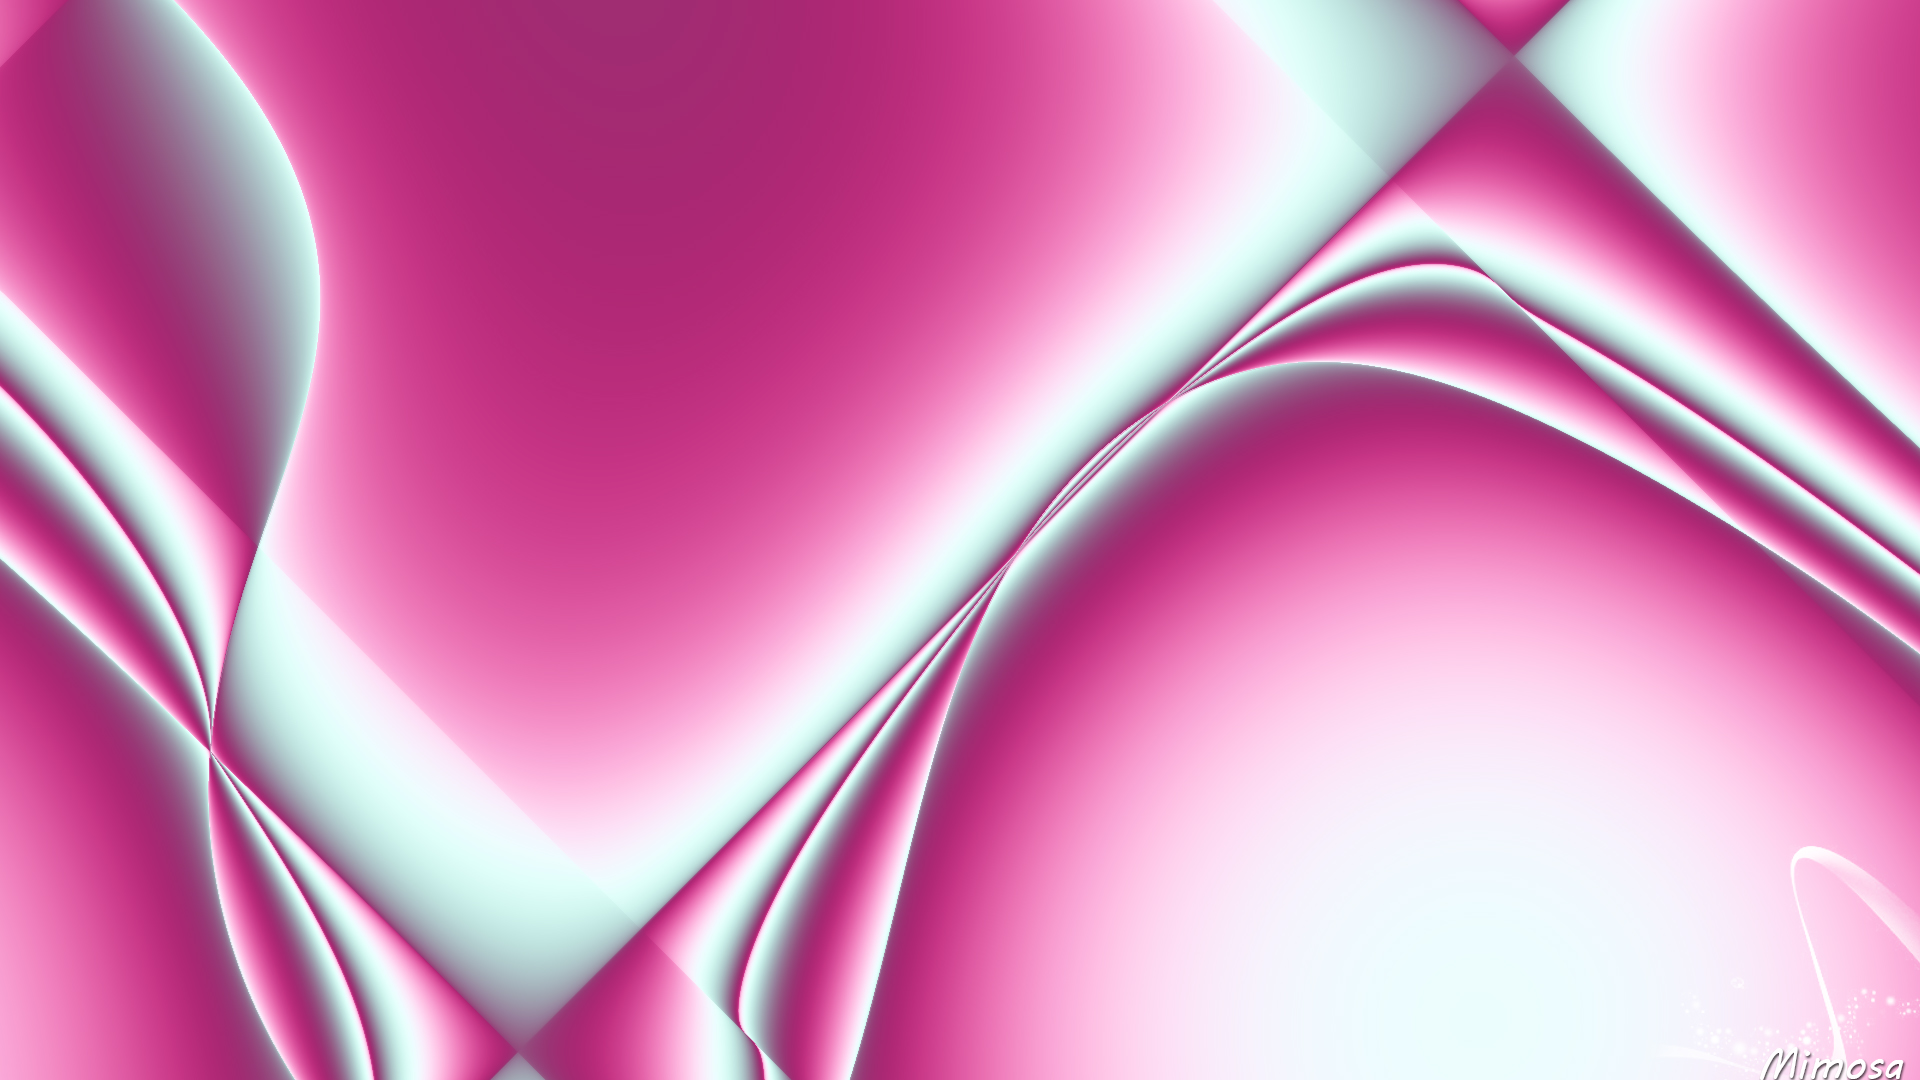 Artistic Curves Digital Art Pink 1920x1080